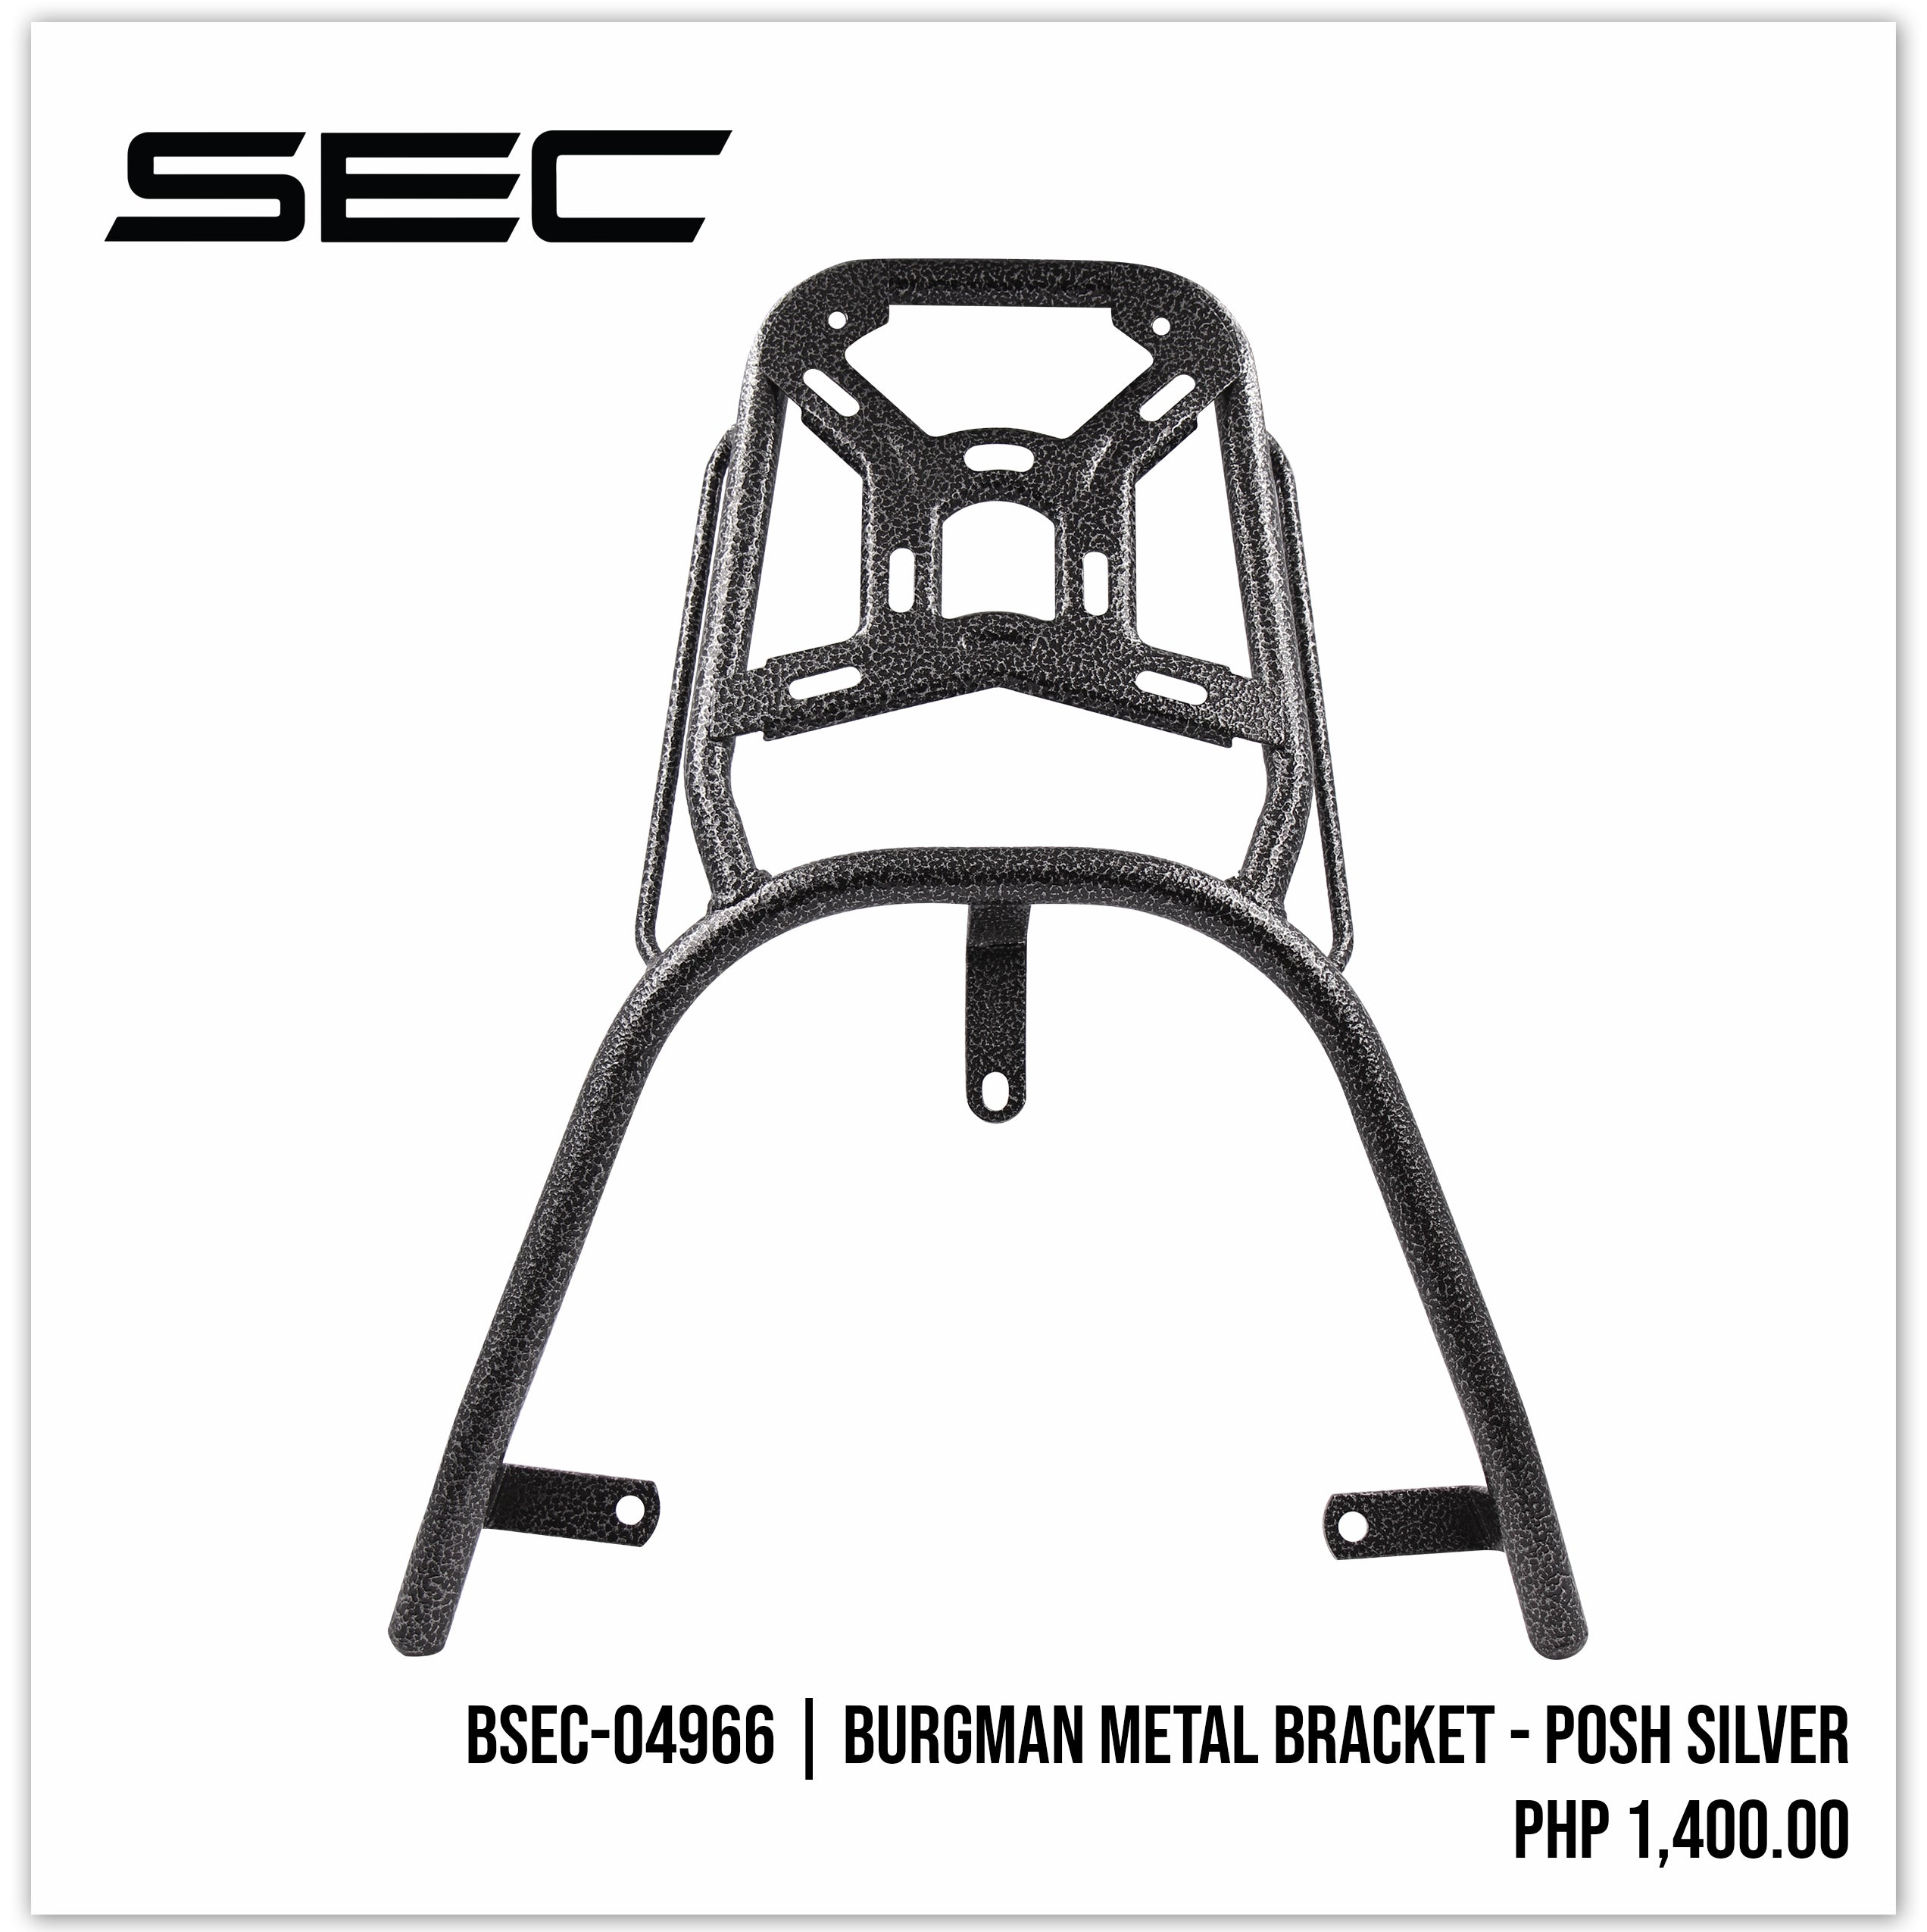 Burgman Metal Bracket - Posh Silver